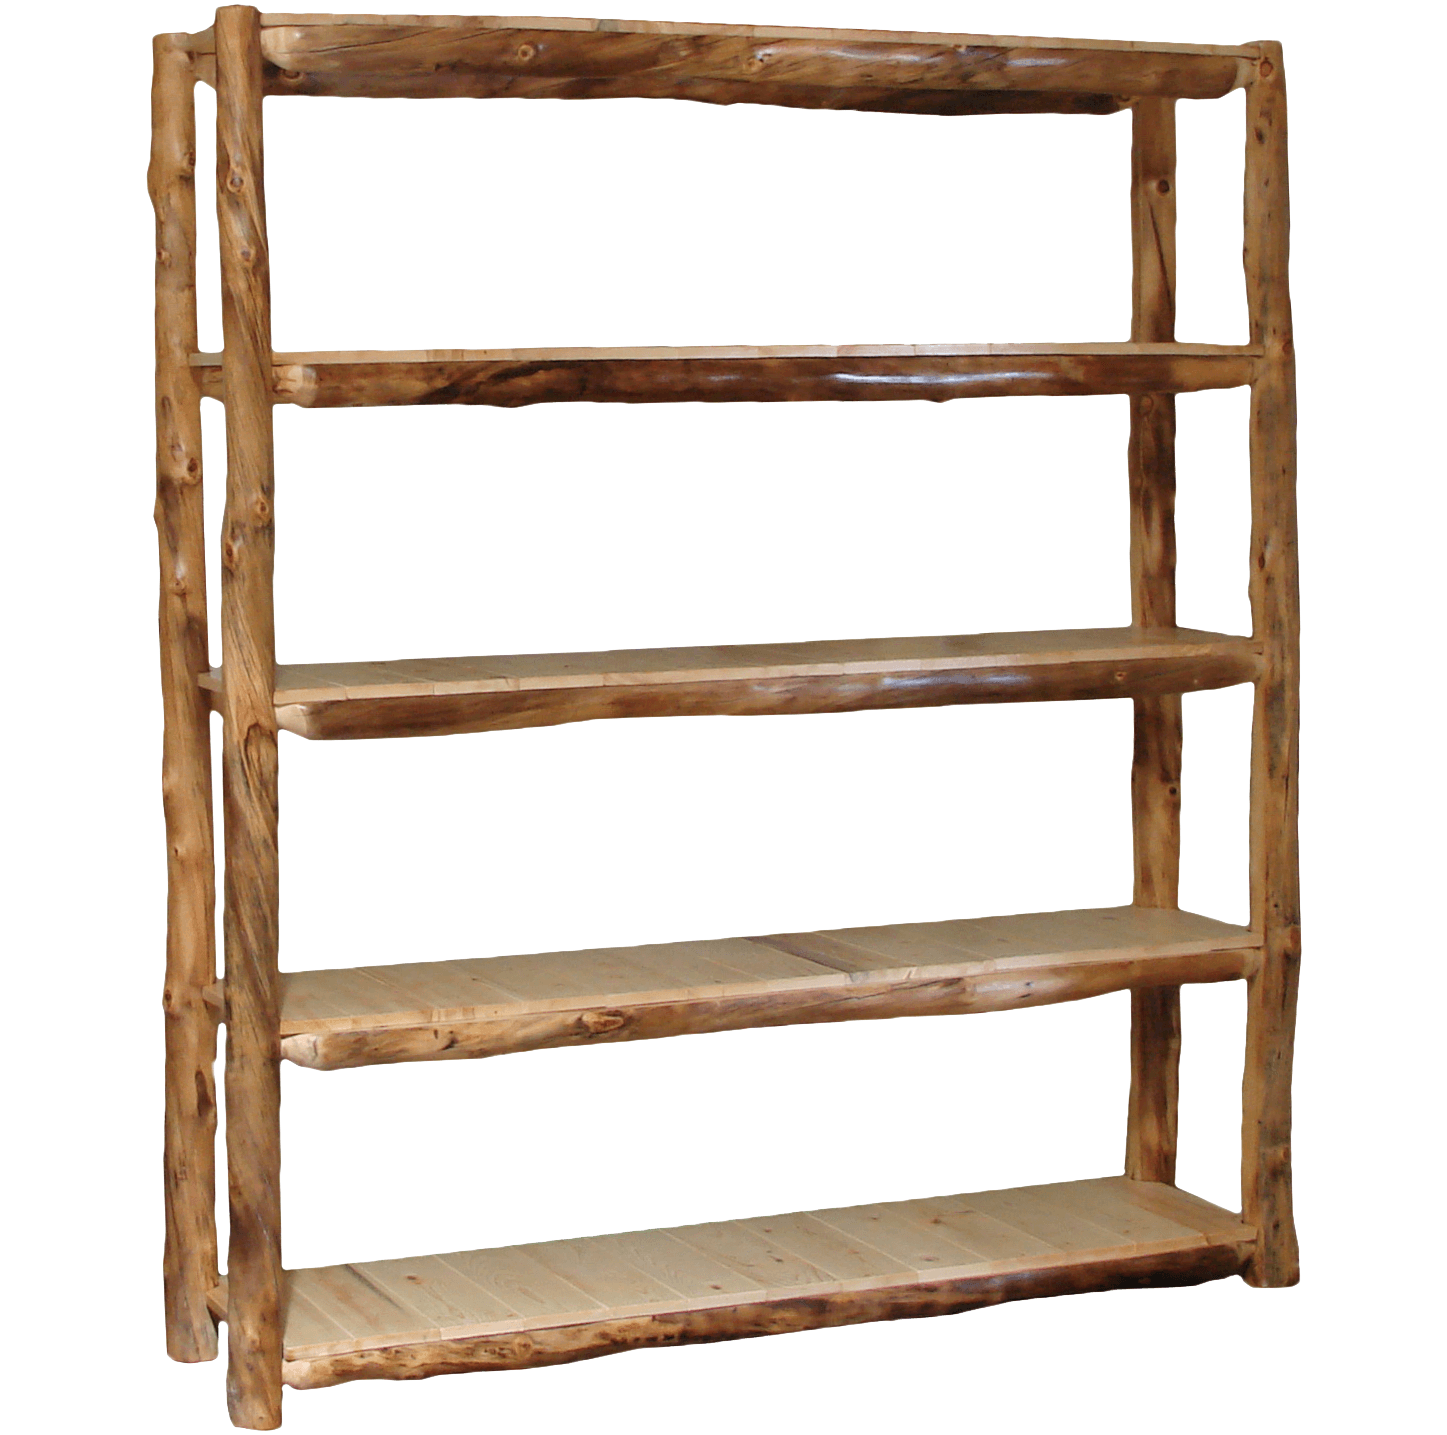 Wood Shelves PNG High Quality Image